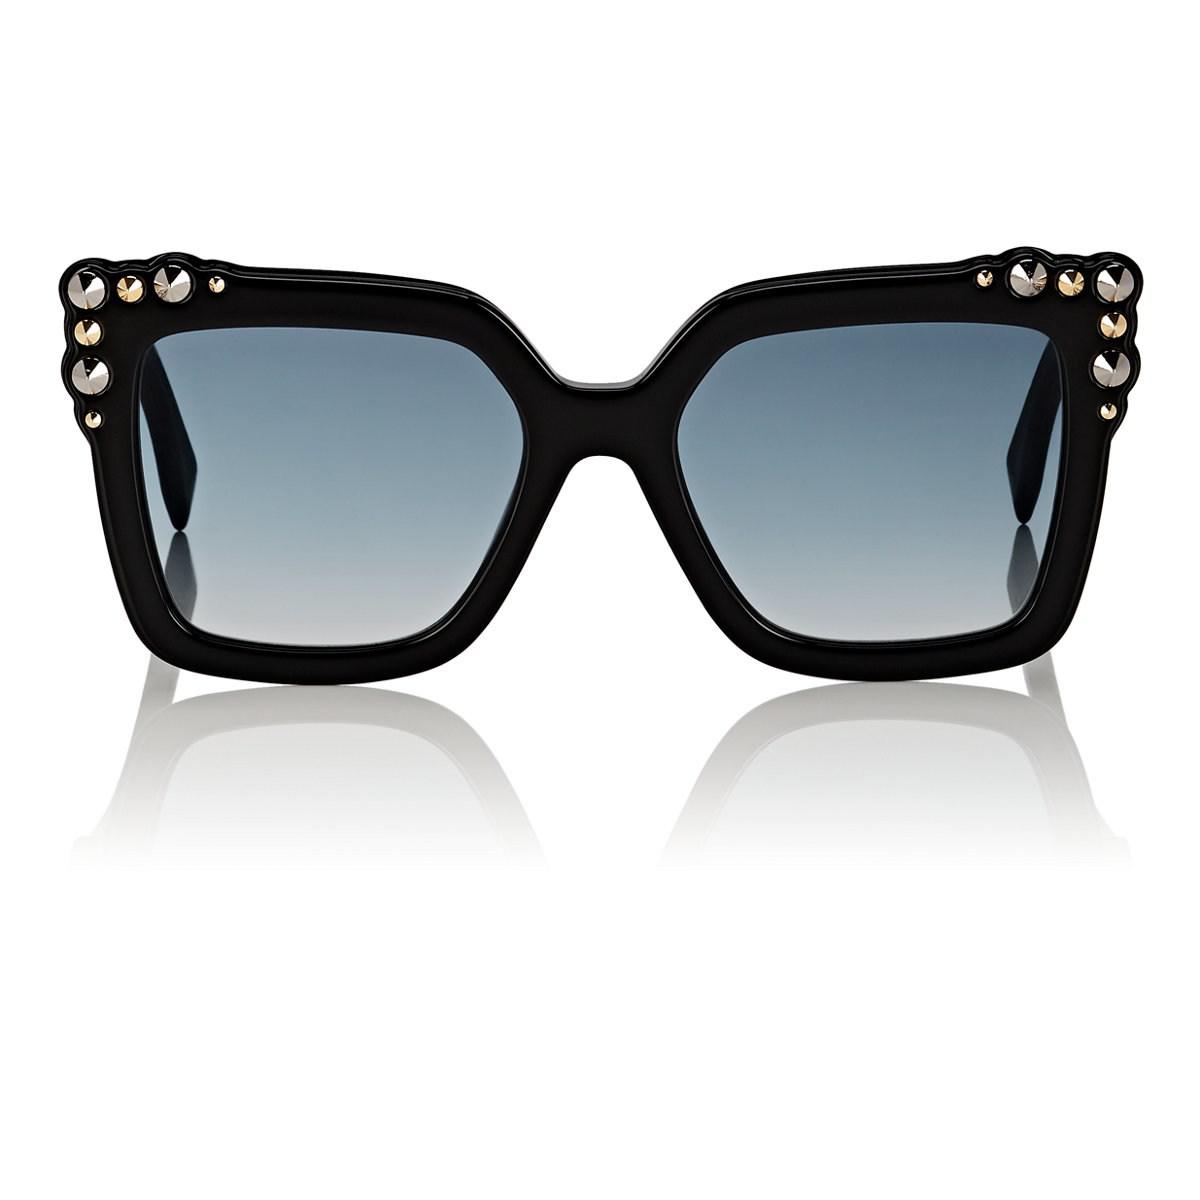 Fendi Ff0260/s Sunglasses in Black - Lyst